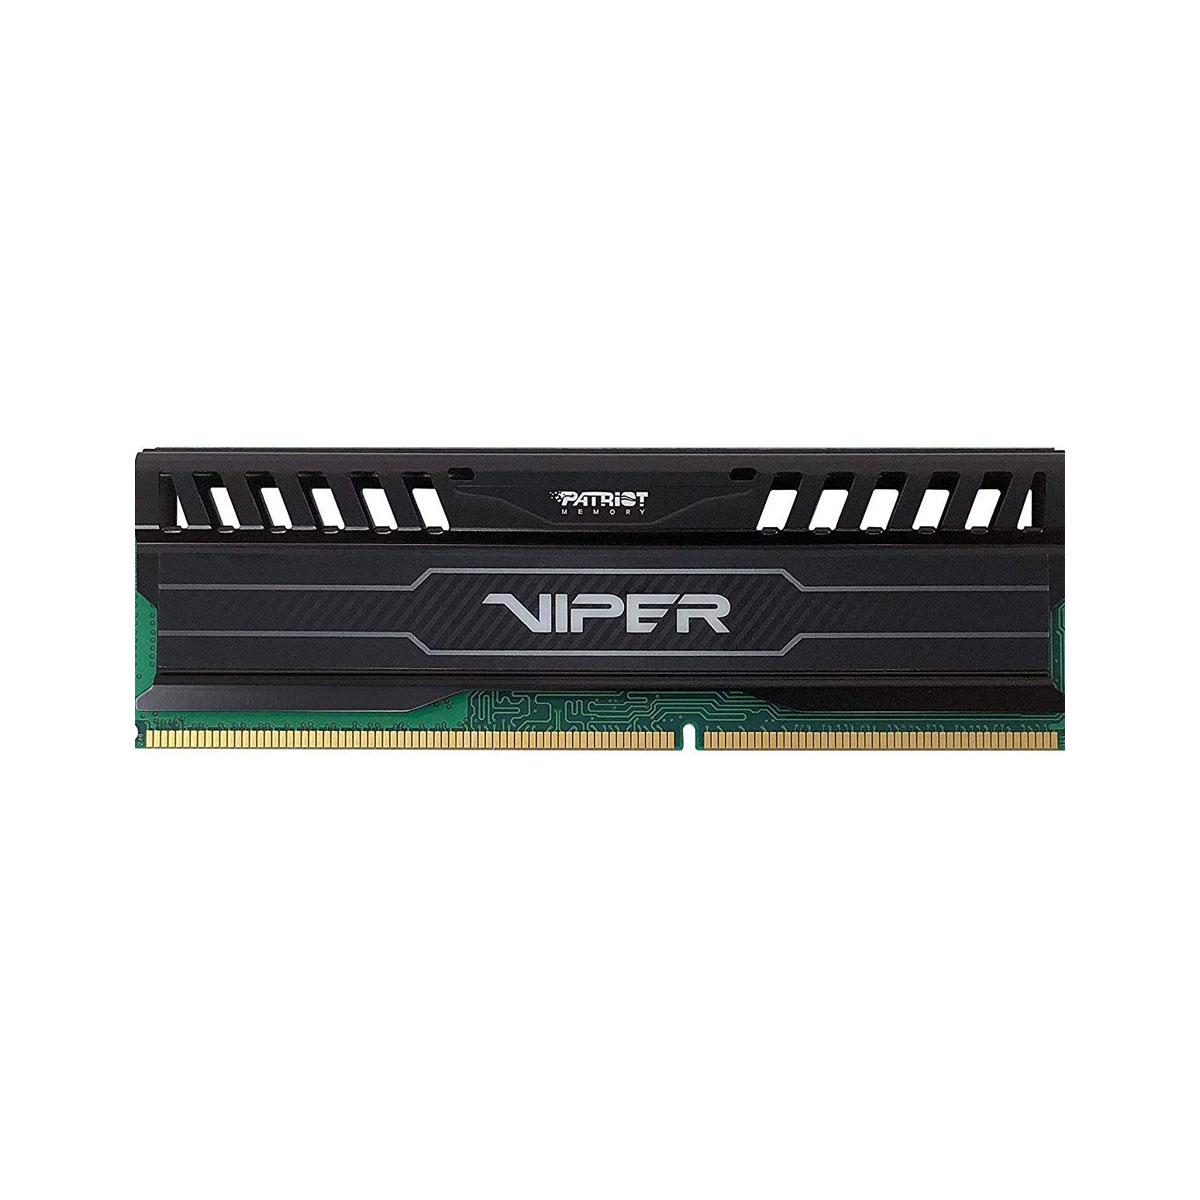 MEMORIA DIMM DDR3 PATRIOT (PV34G160C0) VIPER 3 4GB 1600MHZ, BLACK HEATSINK,CL10 - PV34G160C0